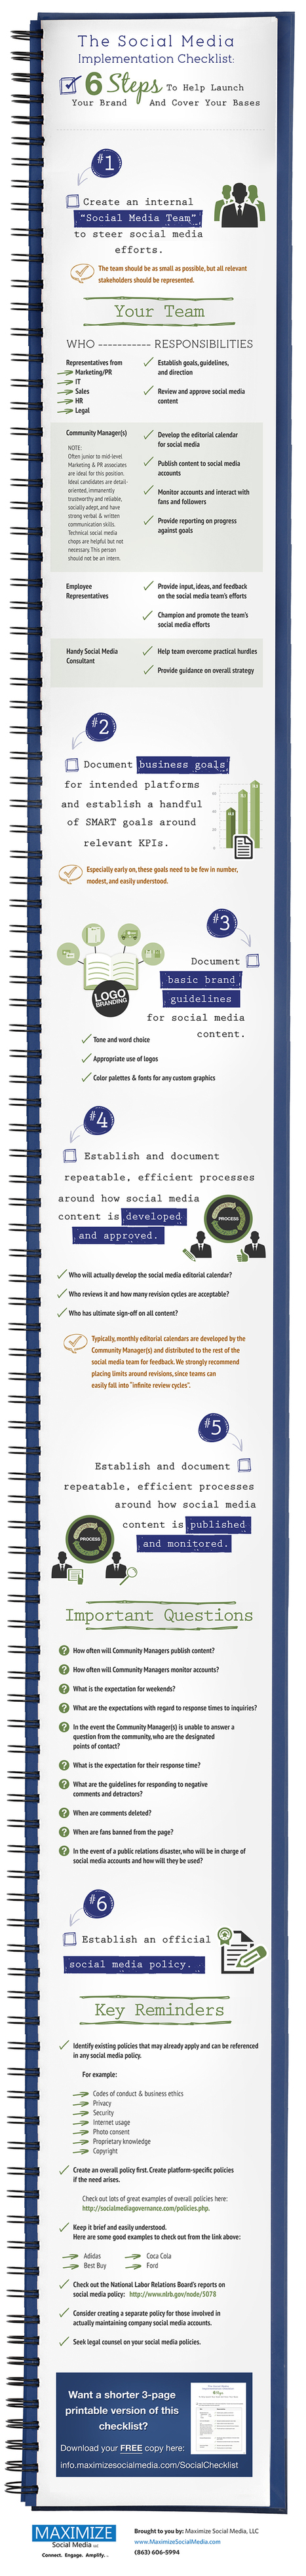 Social Media Implementation Checklist | Social Media and Healthcare | Scoop.it